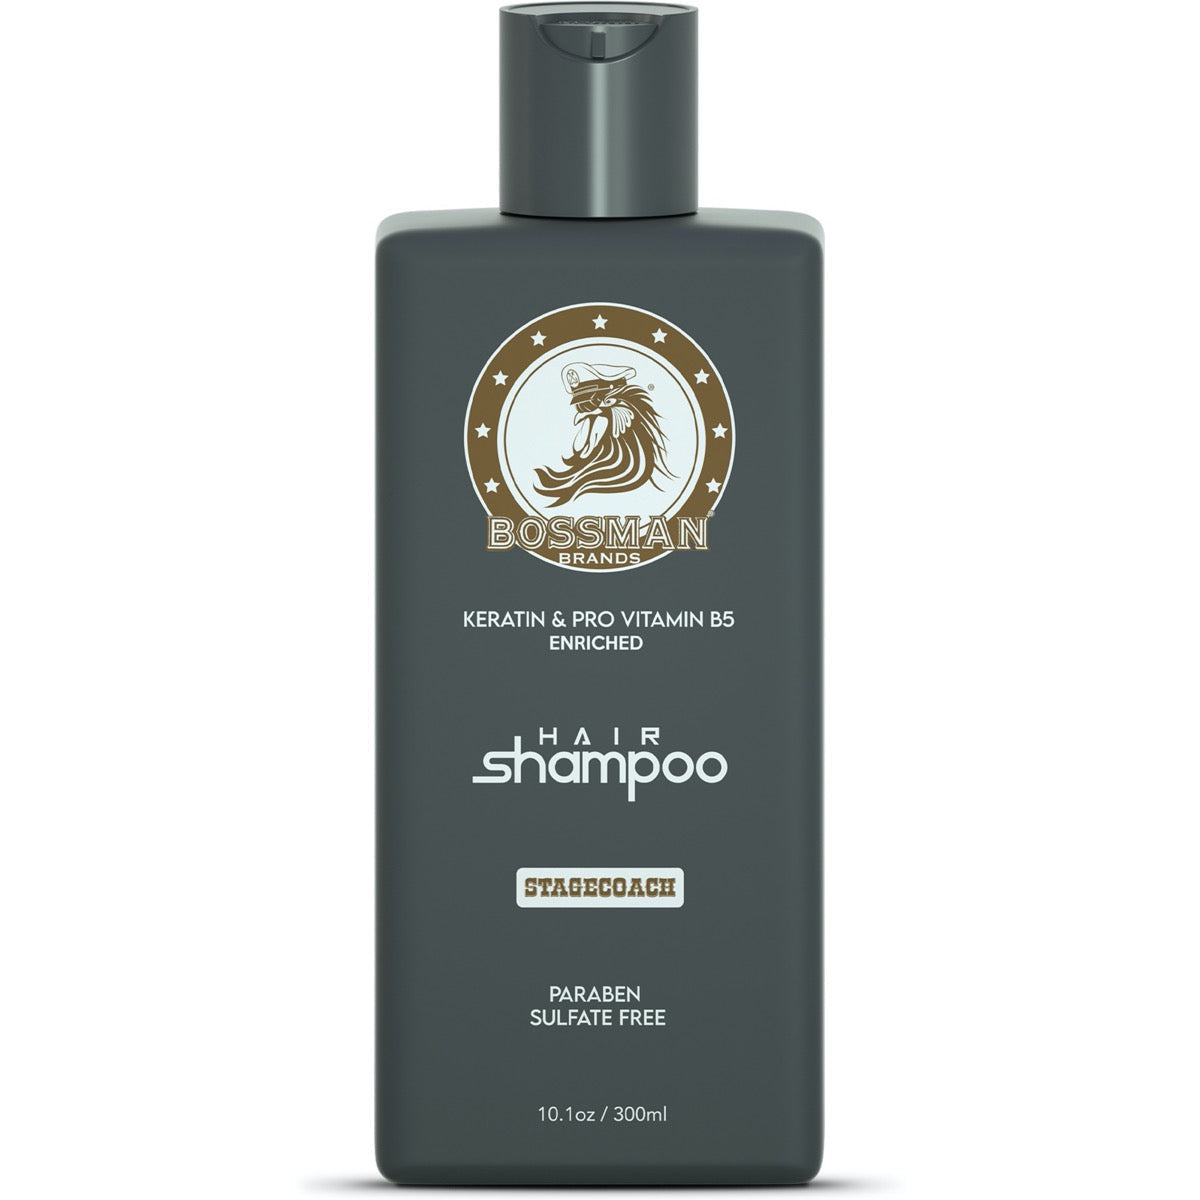 Hair Shampoo Bossman Brands